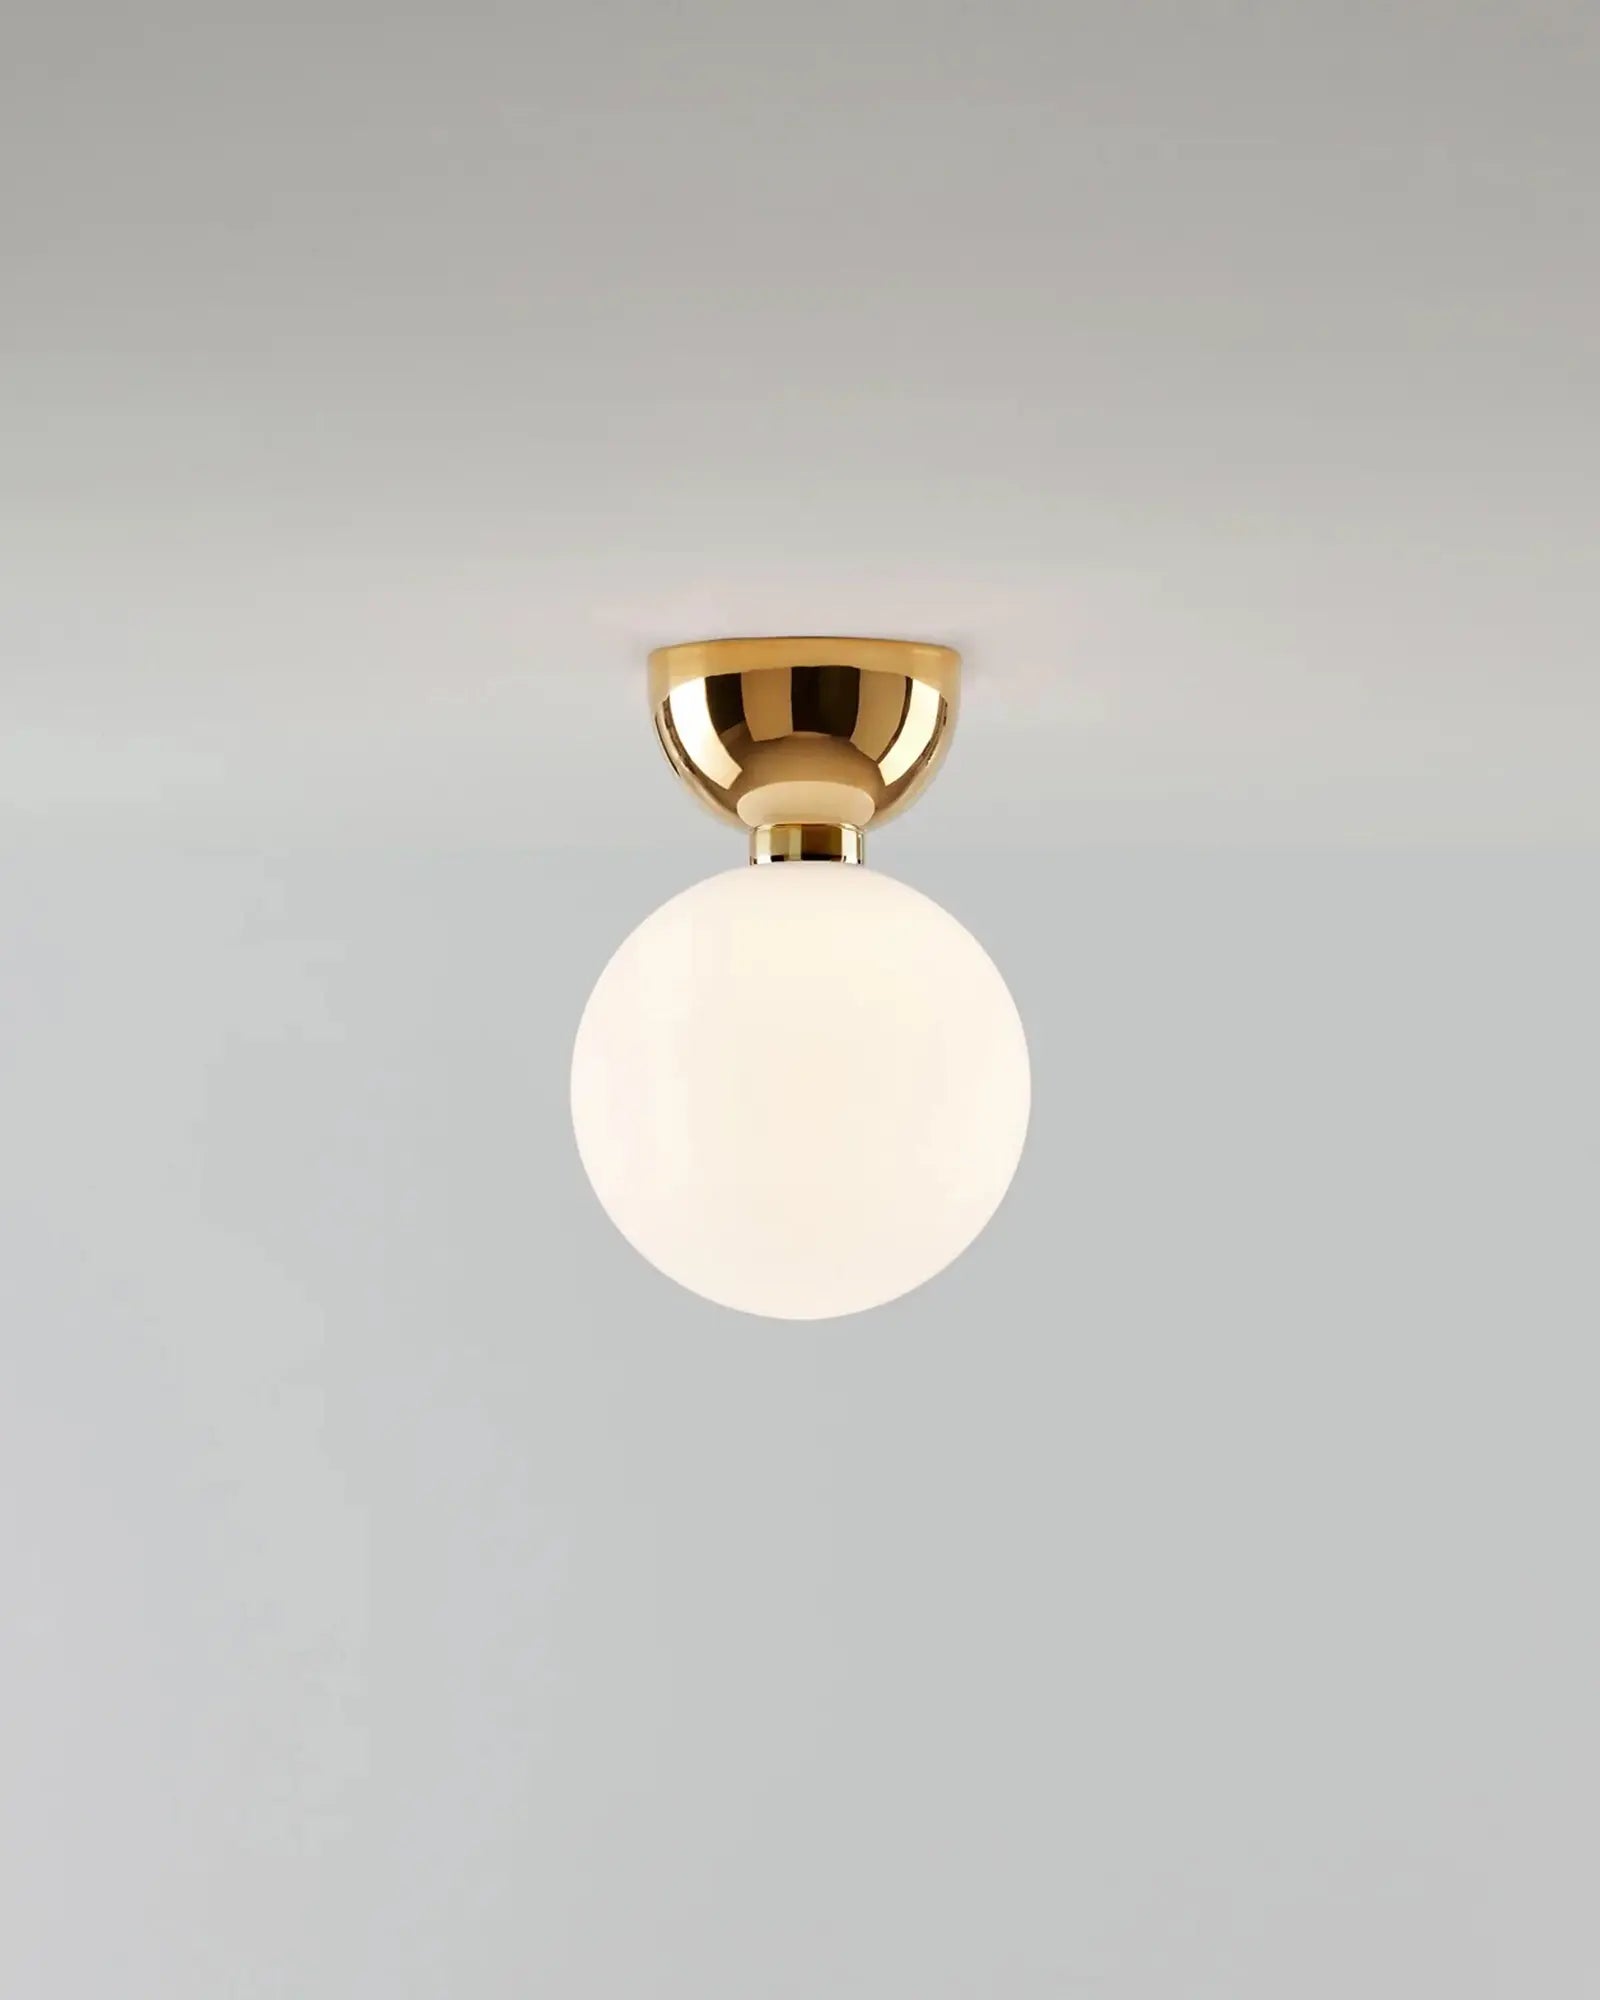 Aballs contemporary orb ceiling light golden